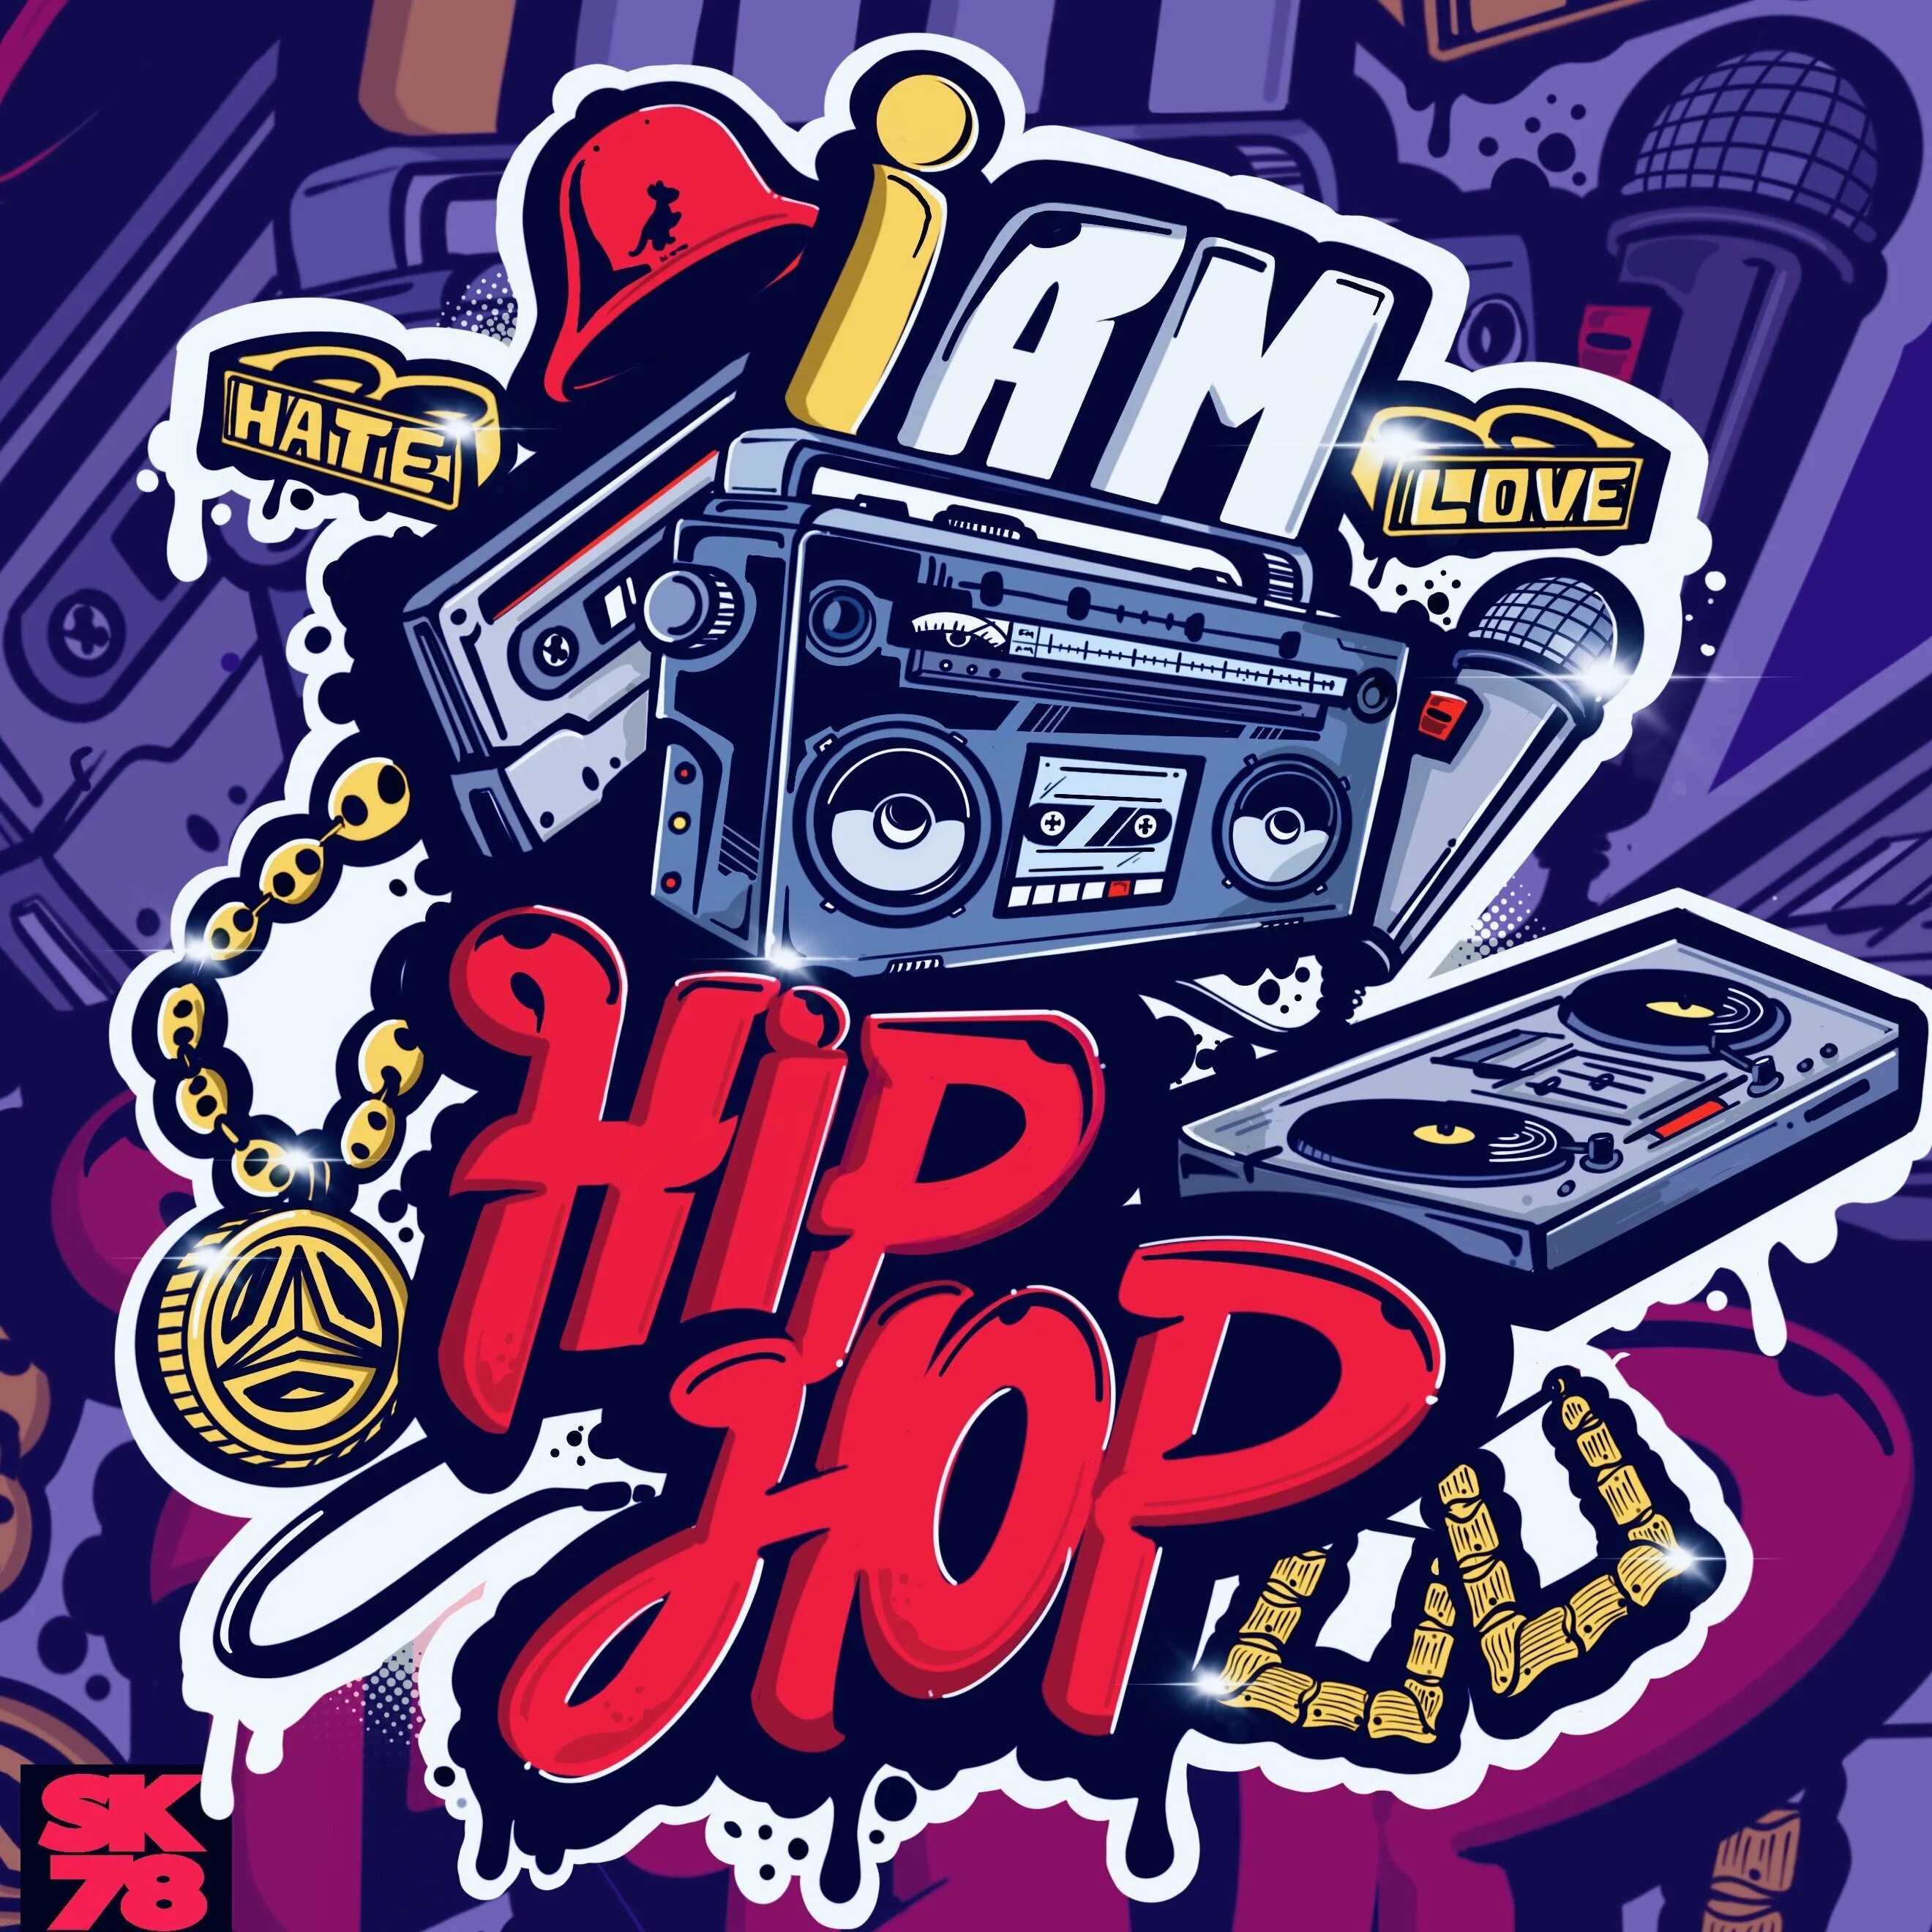 Хип хоп. Хип хоп арт. Хип хоп иллюстрации. Хип хоп музыкальный стиль.